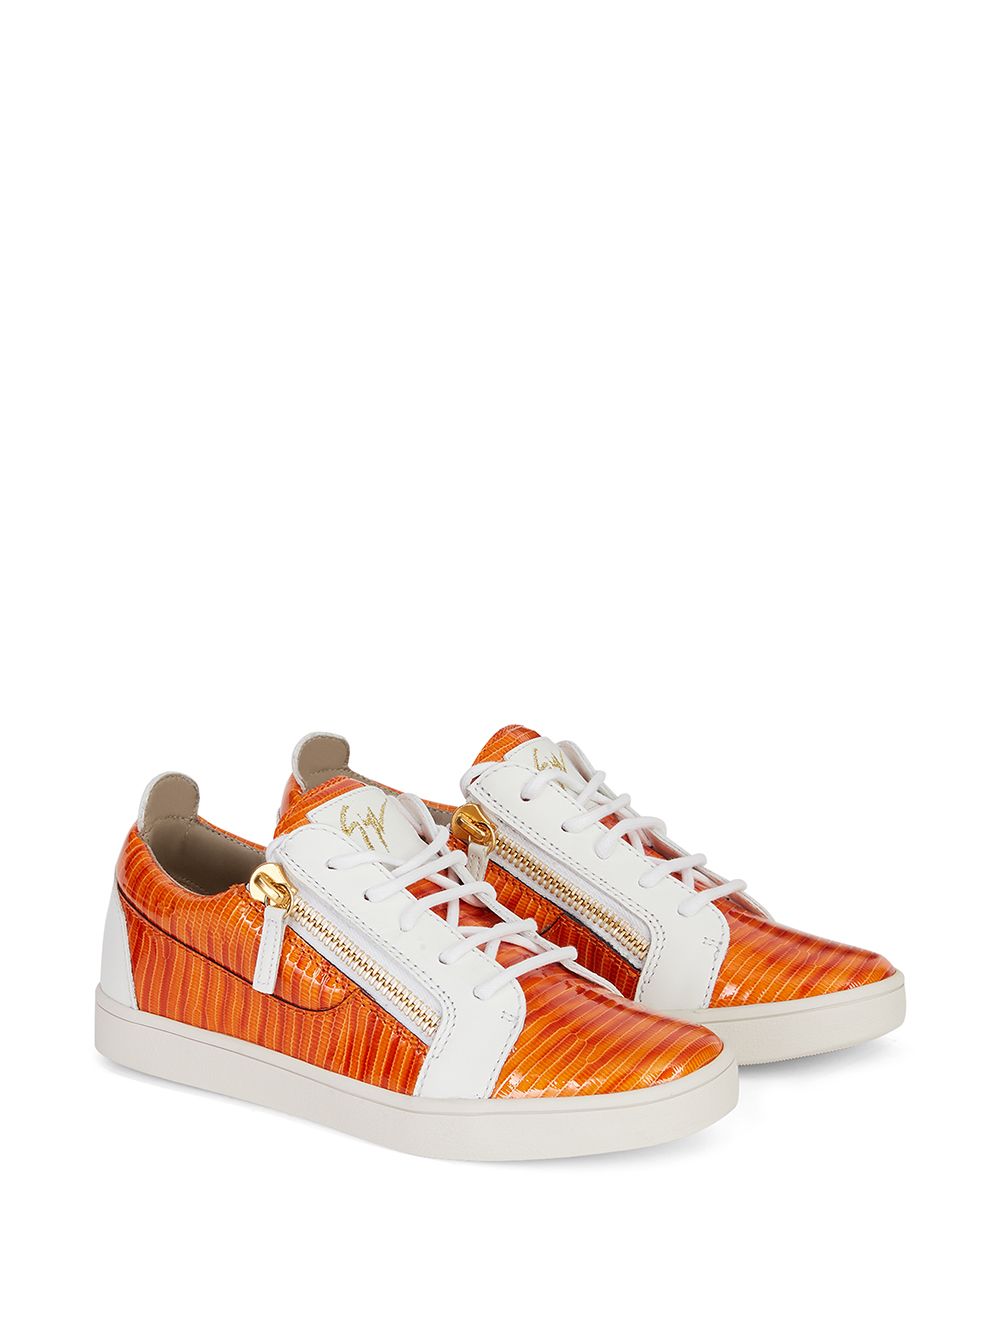 Giuseppe Zanotti Gail sneakers met slangenleer-effect - Oranje